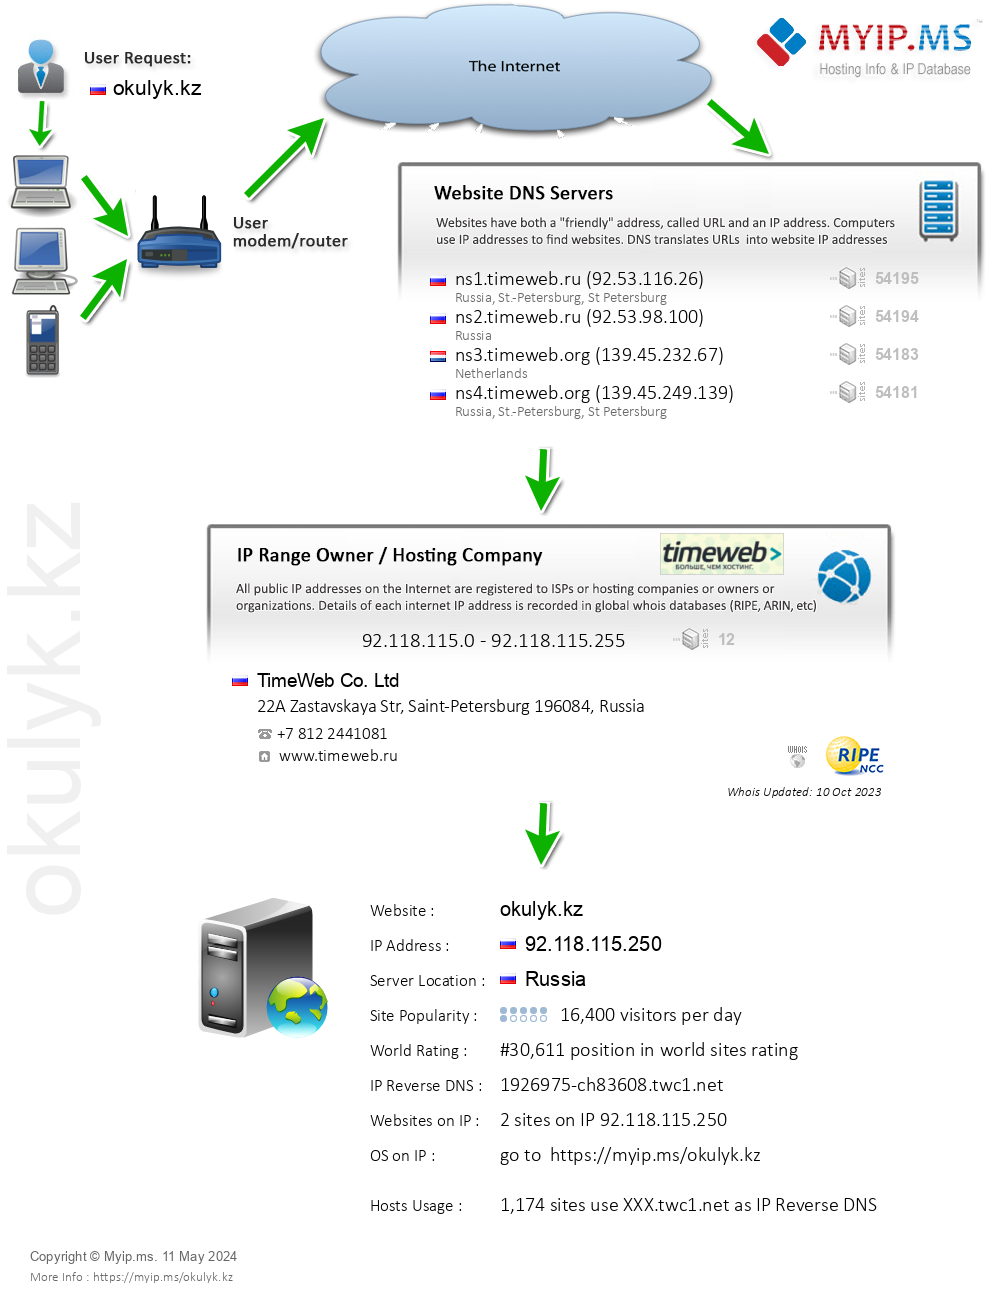 Okulyk.kz - Website Hosting Visual IP Diagram